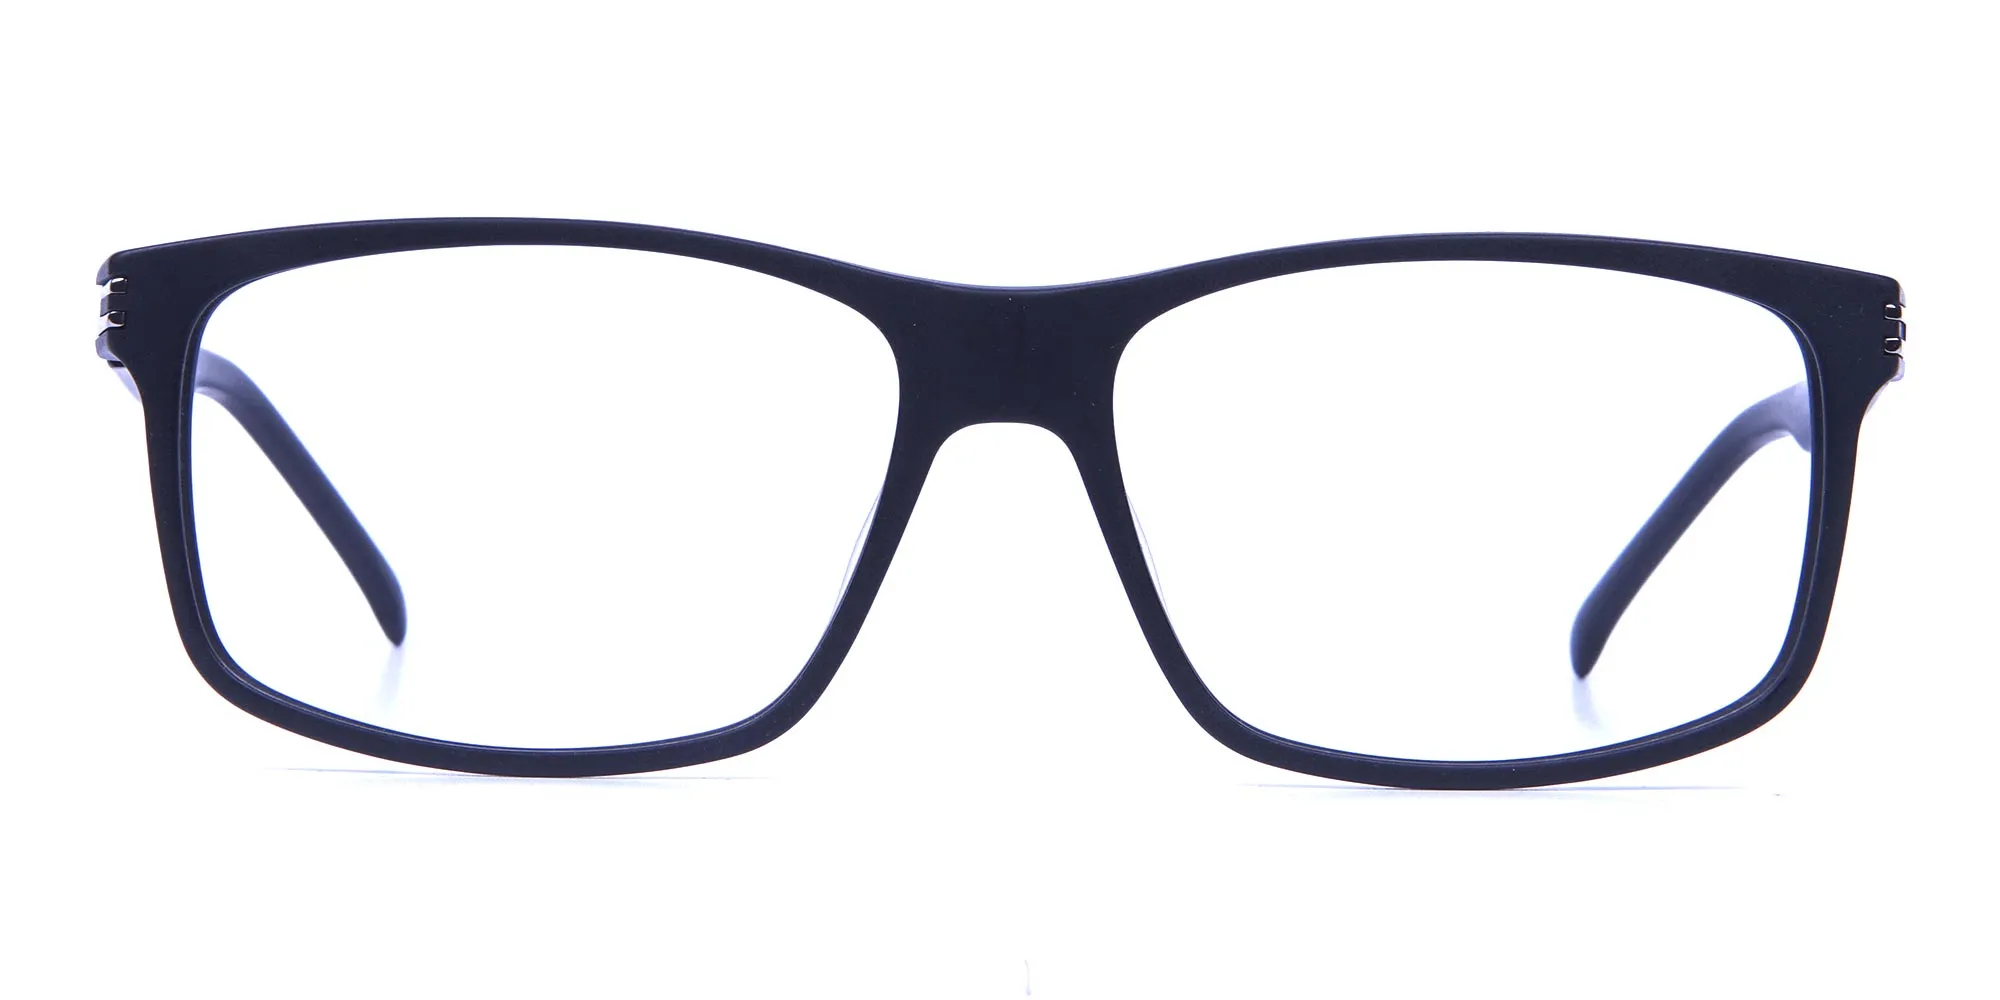 Super Flexible 360 Degree Bendable Glasses in Matte Black - 1